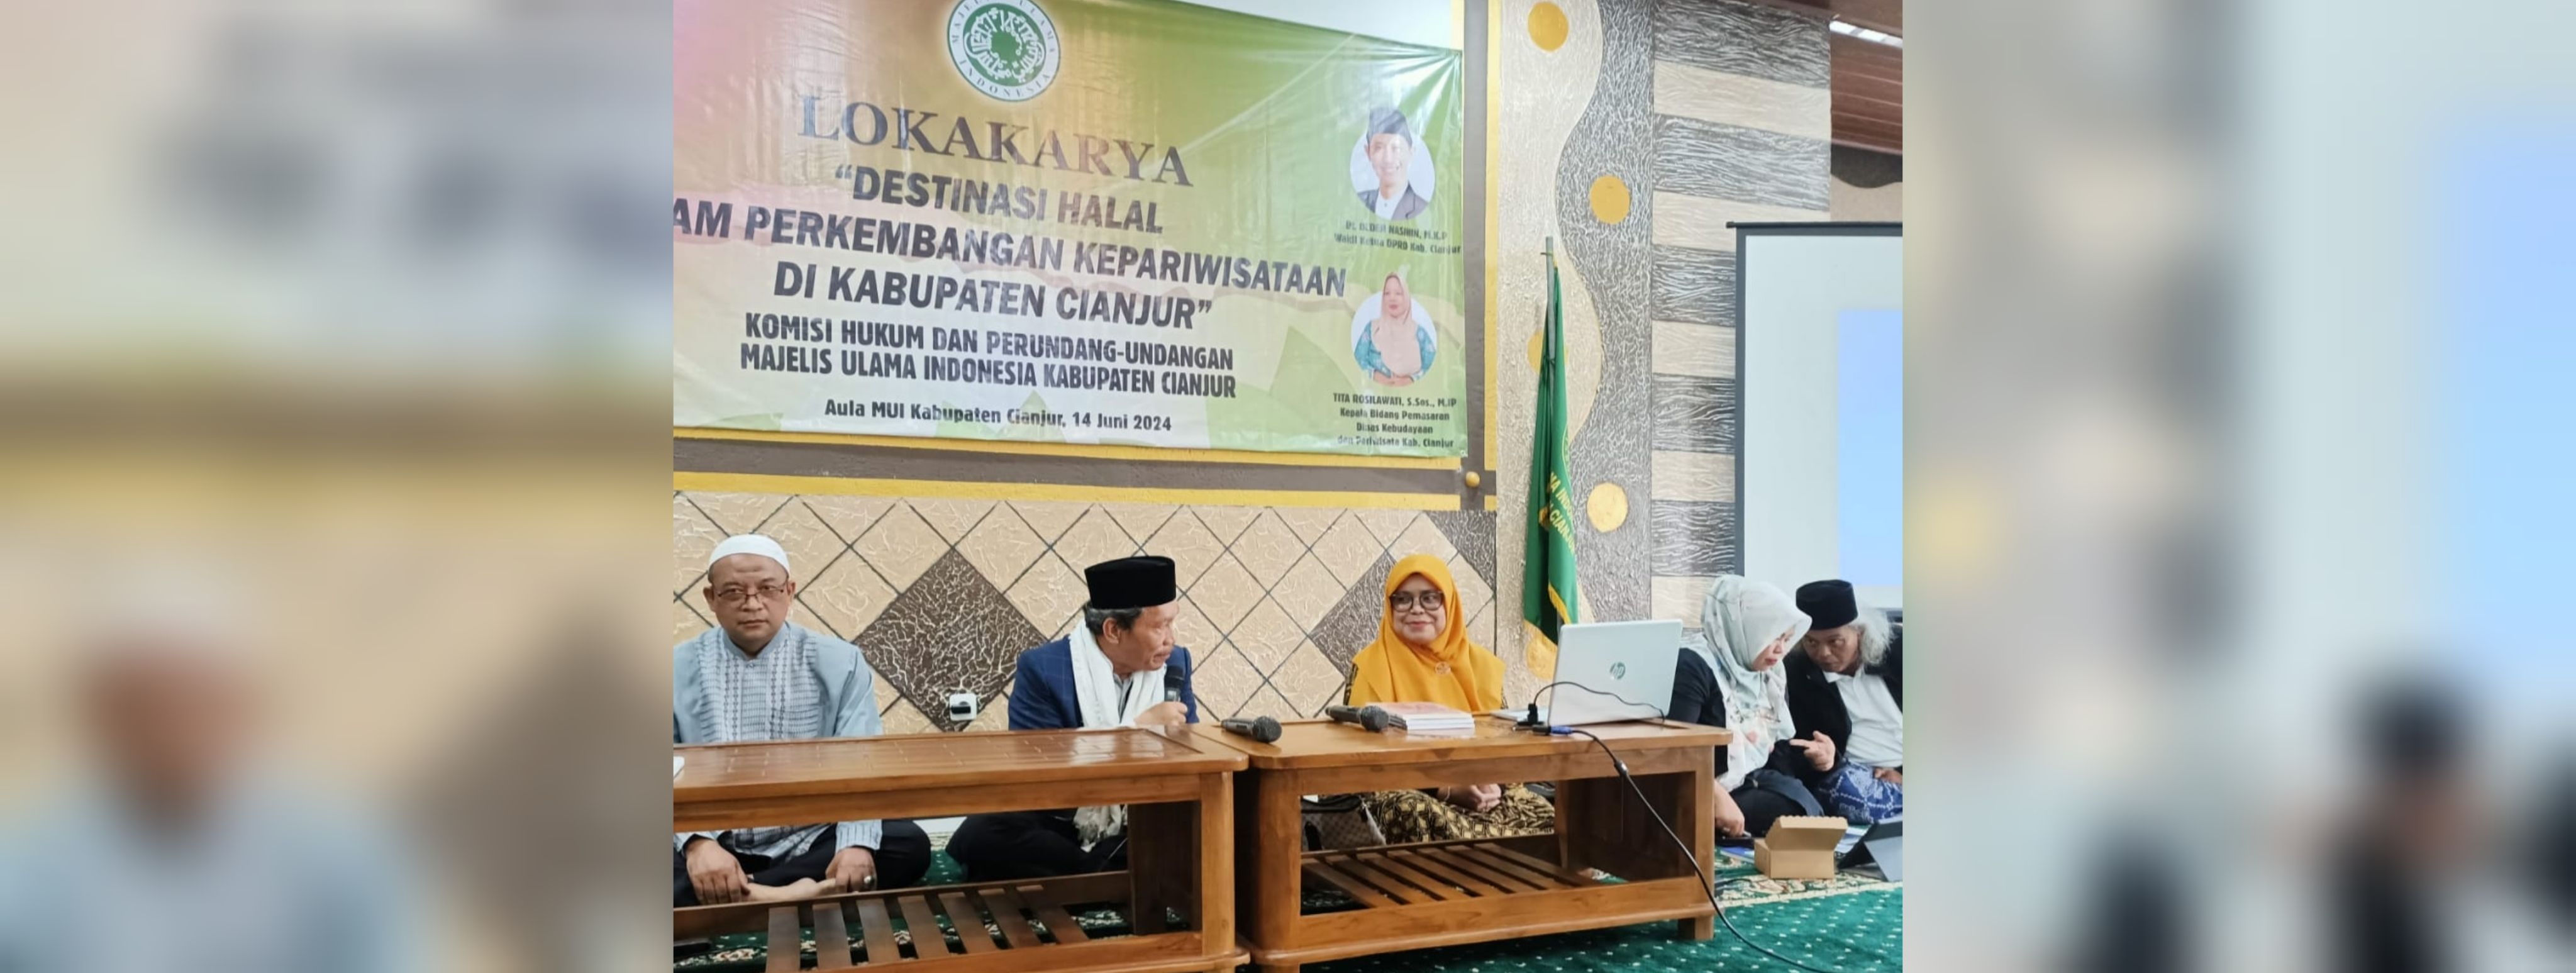 Ketua MUI Cianjur, KH Abdul Rouf menyampaikan pemaparan dalam lokakarya destinasi halal (Foto: dok. MUI Cianjur)